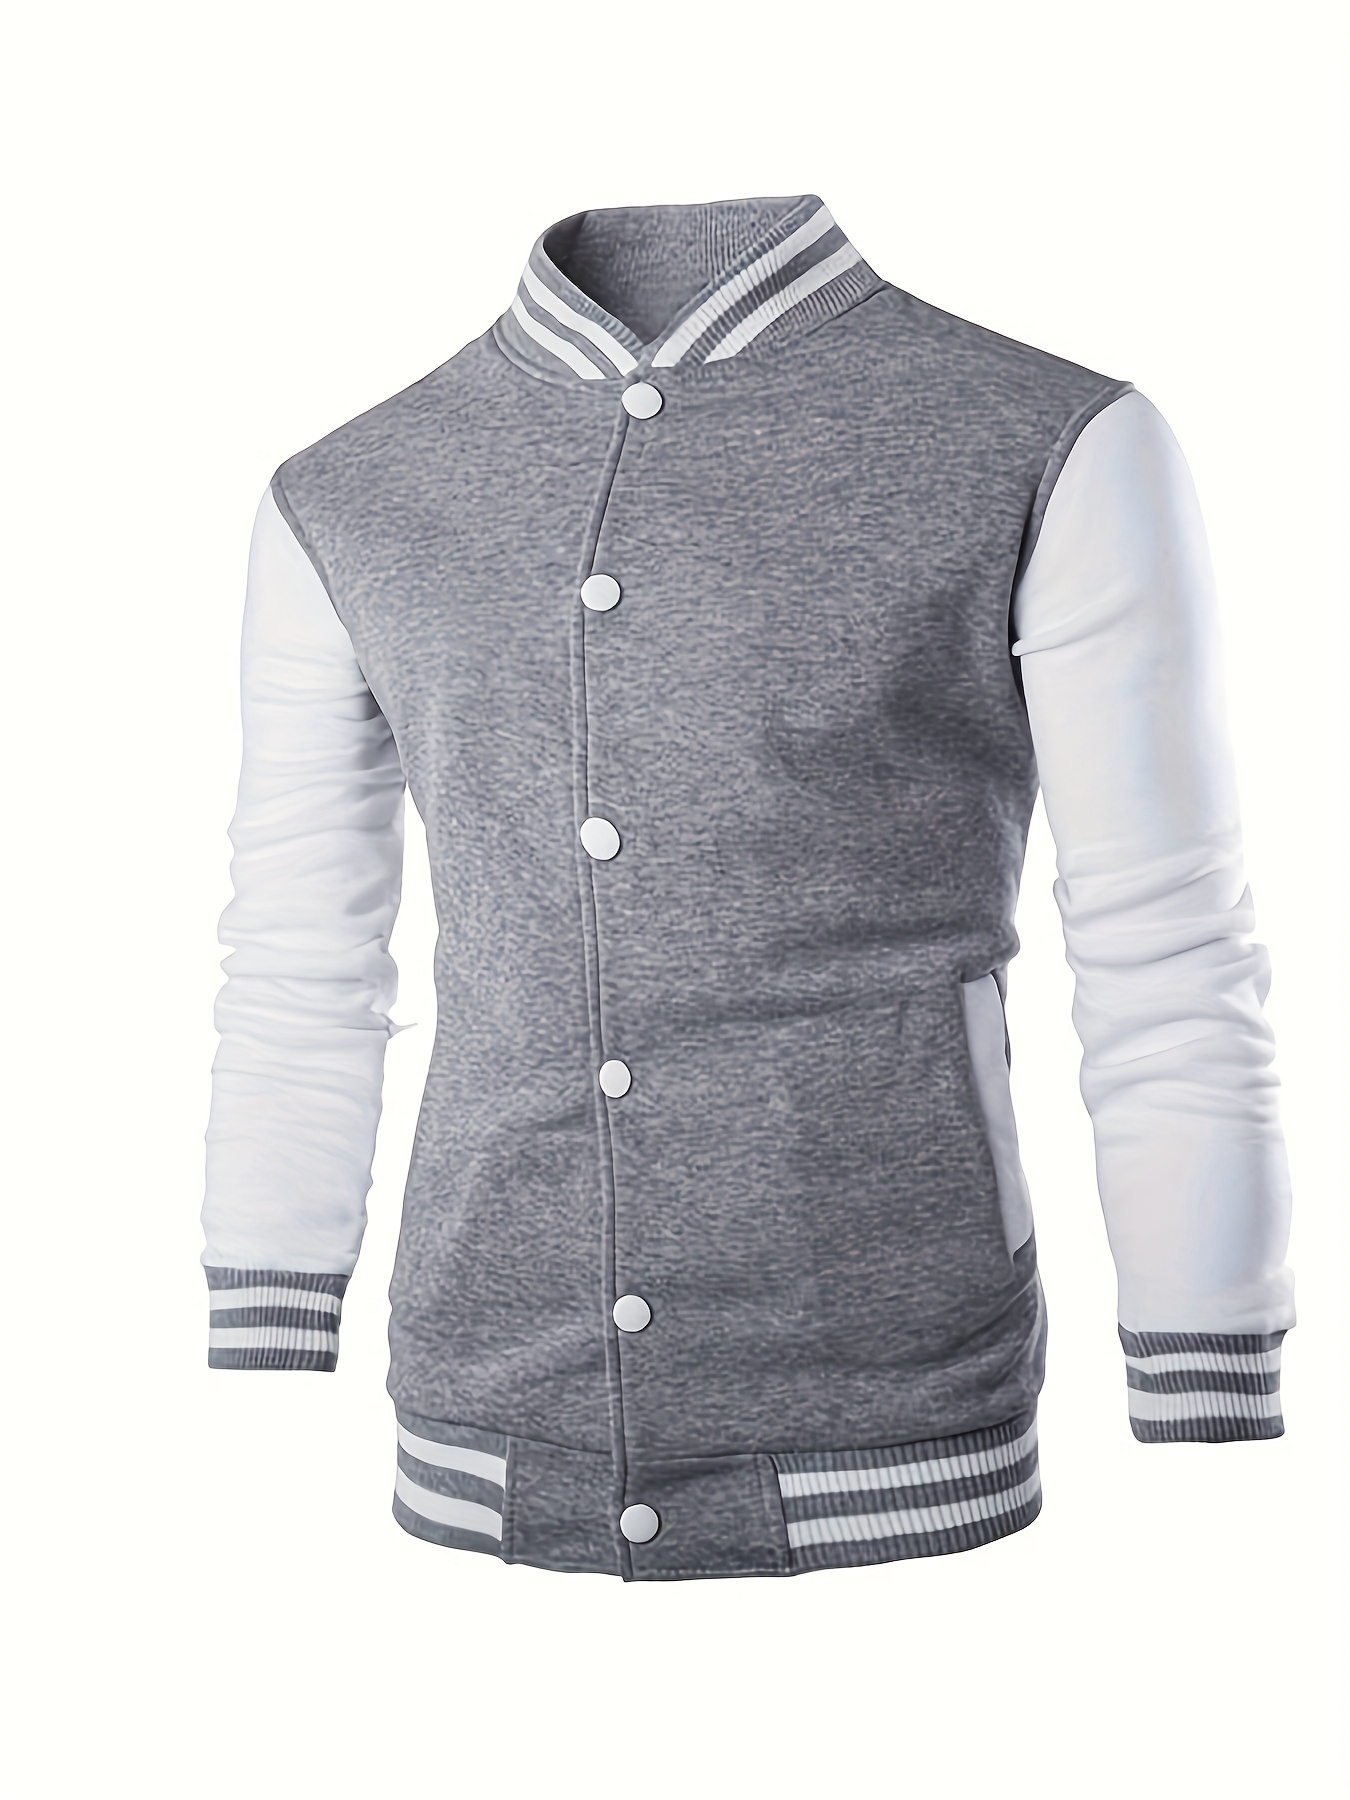 warm fleece varsity jacket mens casual color block button up jacket for fall winter school details 13